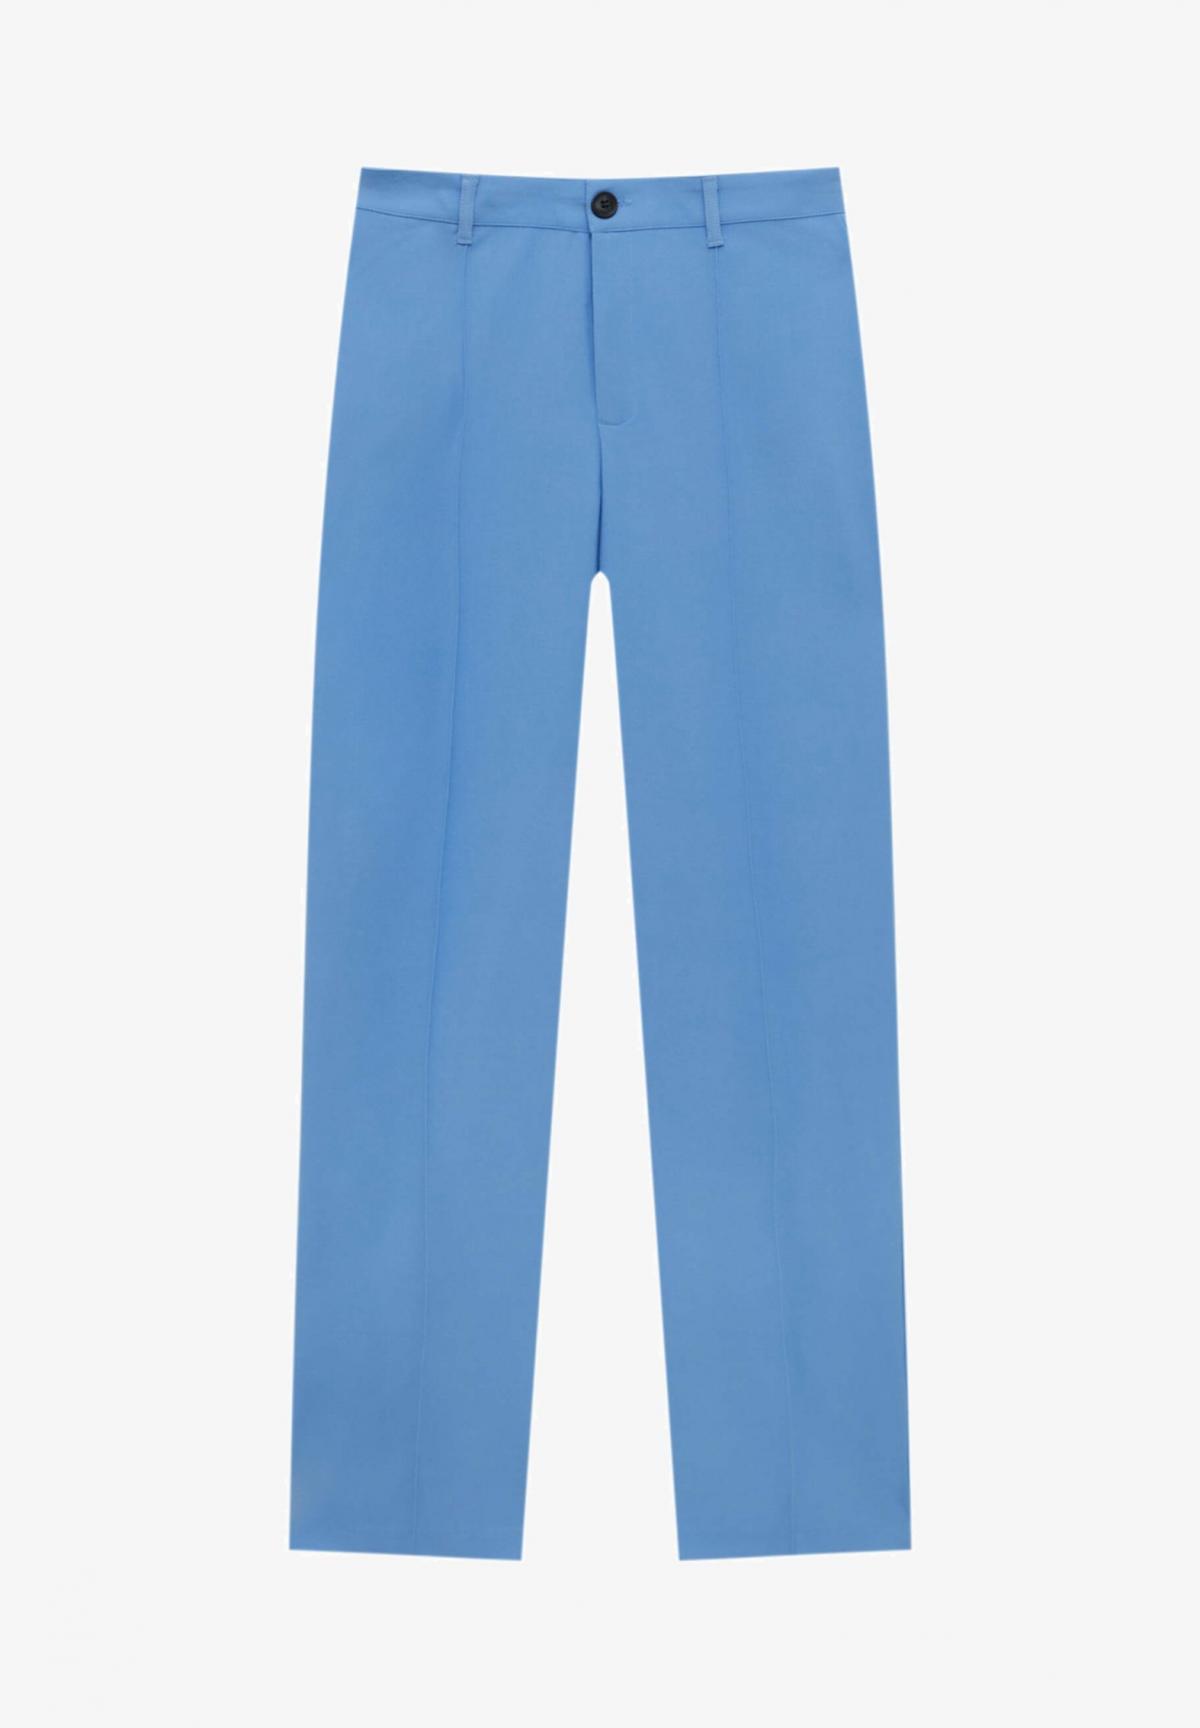 Pantalon bleu ciel